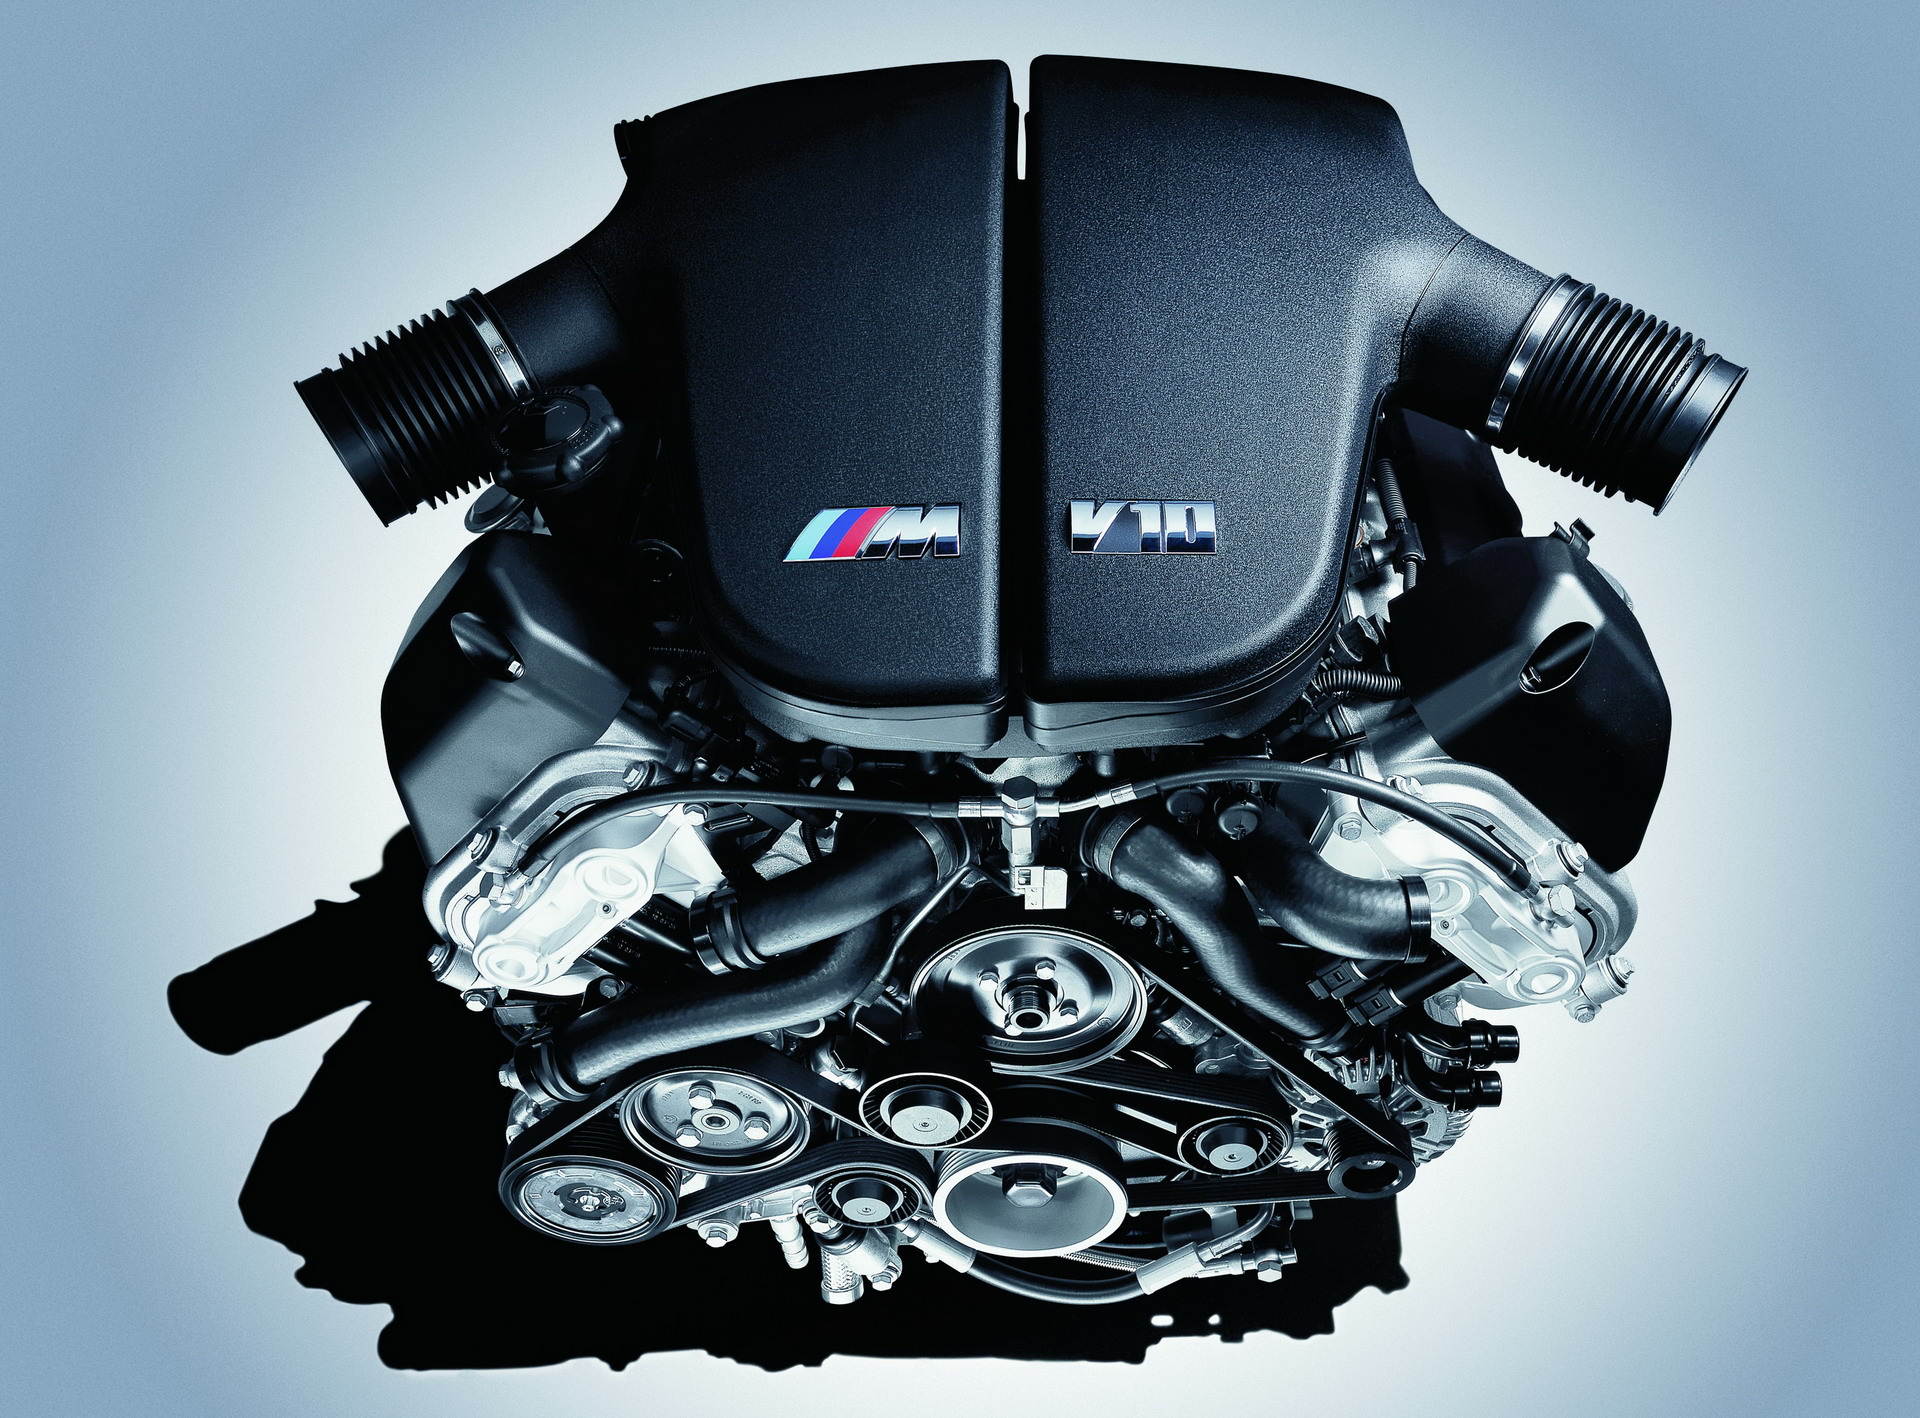 The BMW S85 V10 engine 11